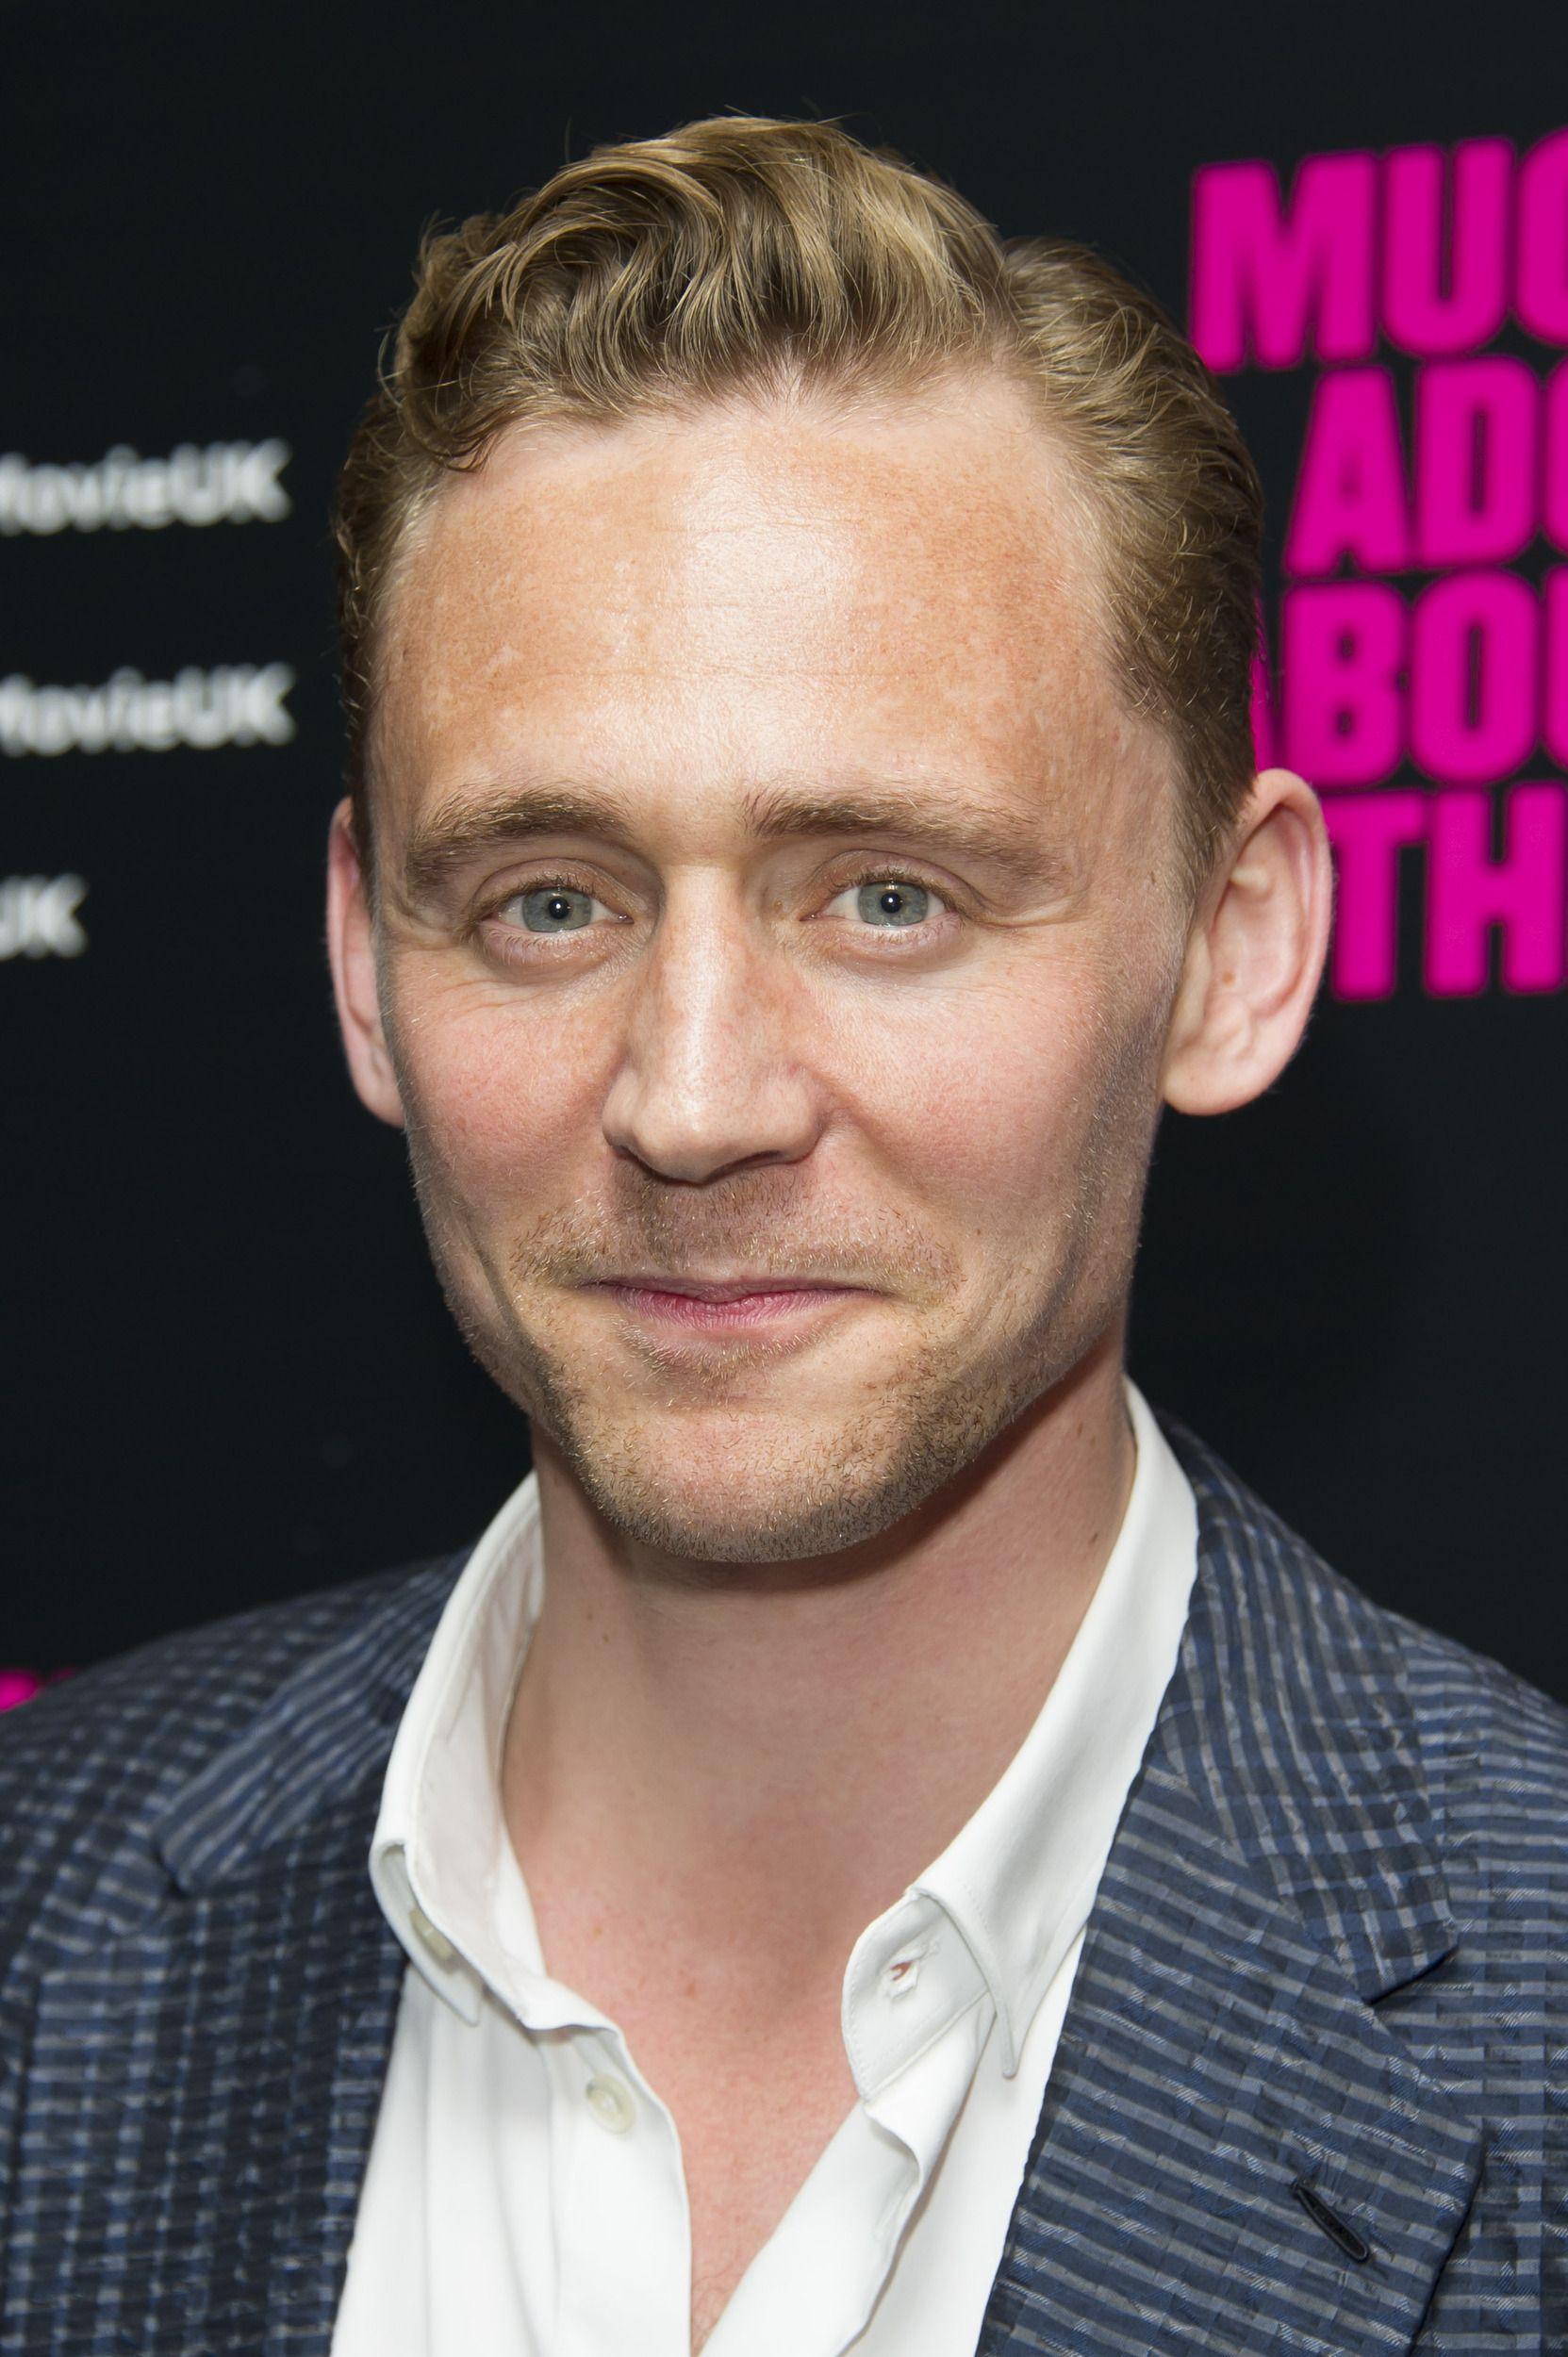 Tom Hiddleston Wallpaper For IPhone 6 Download Celebrities